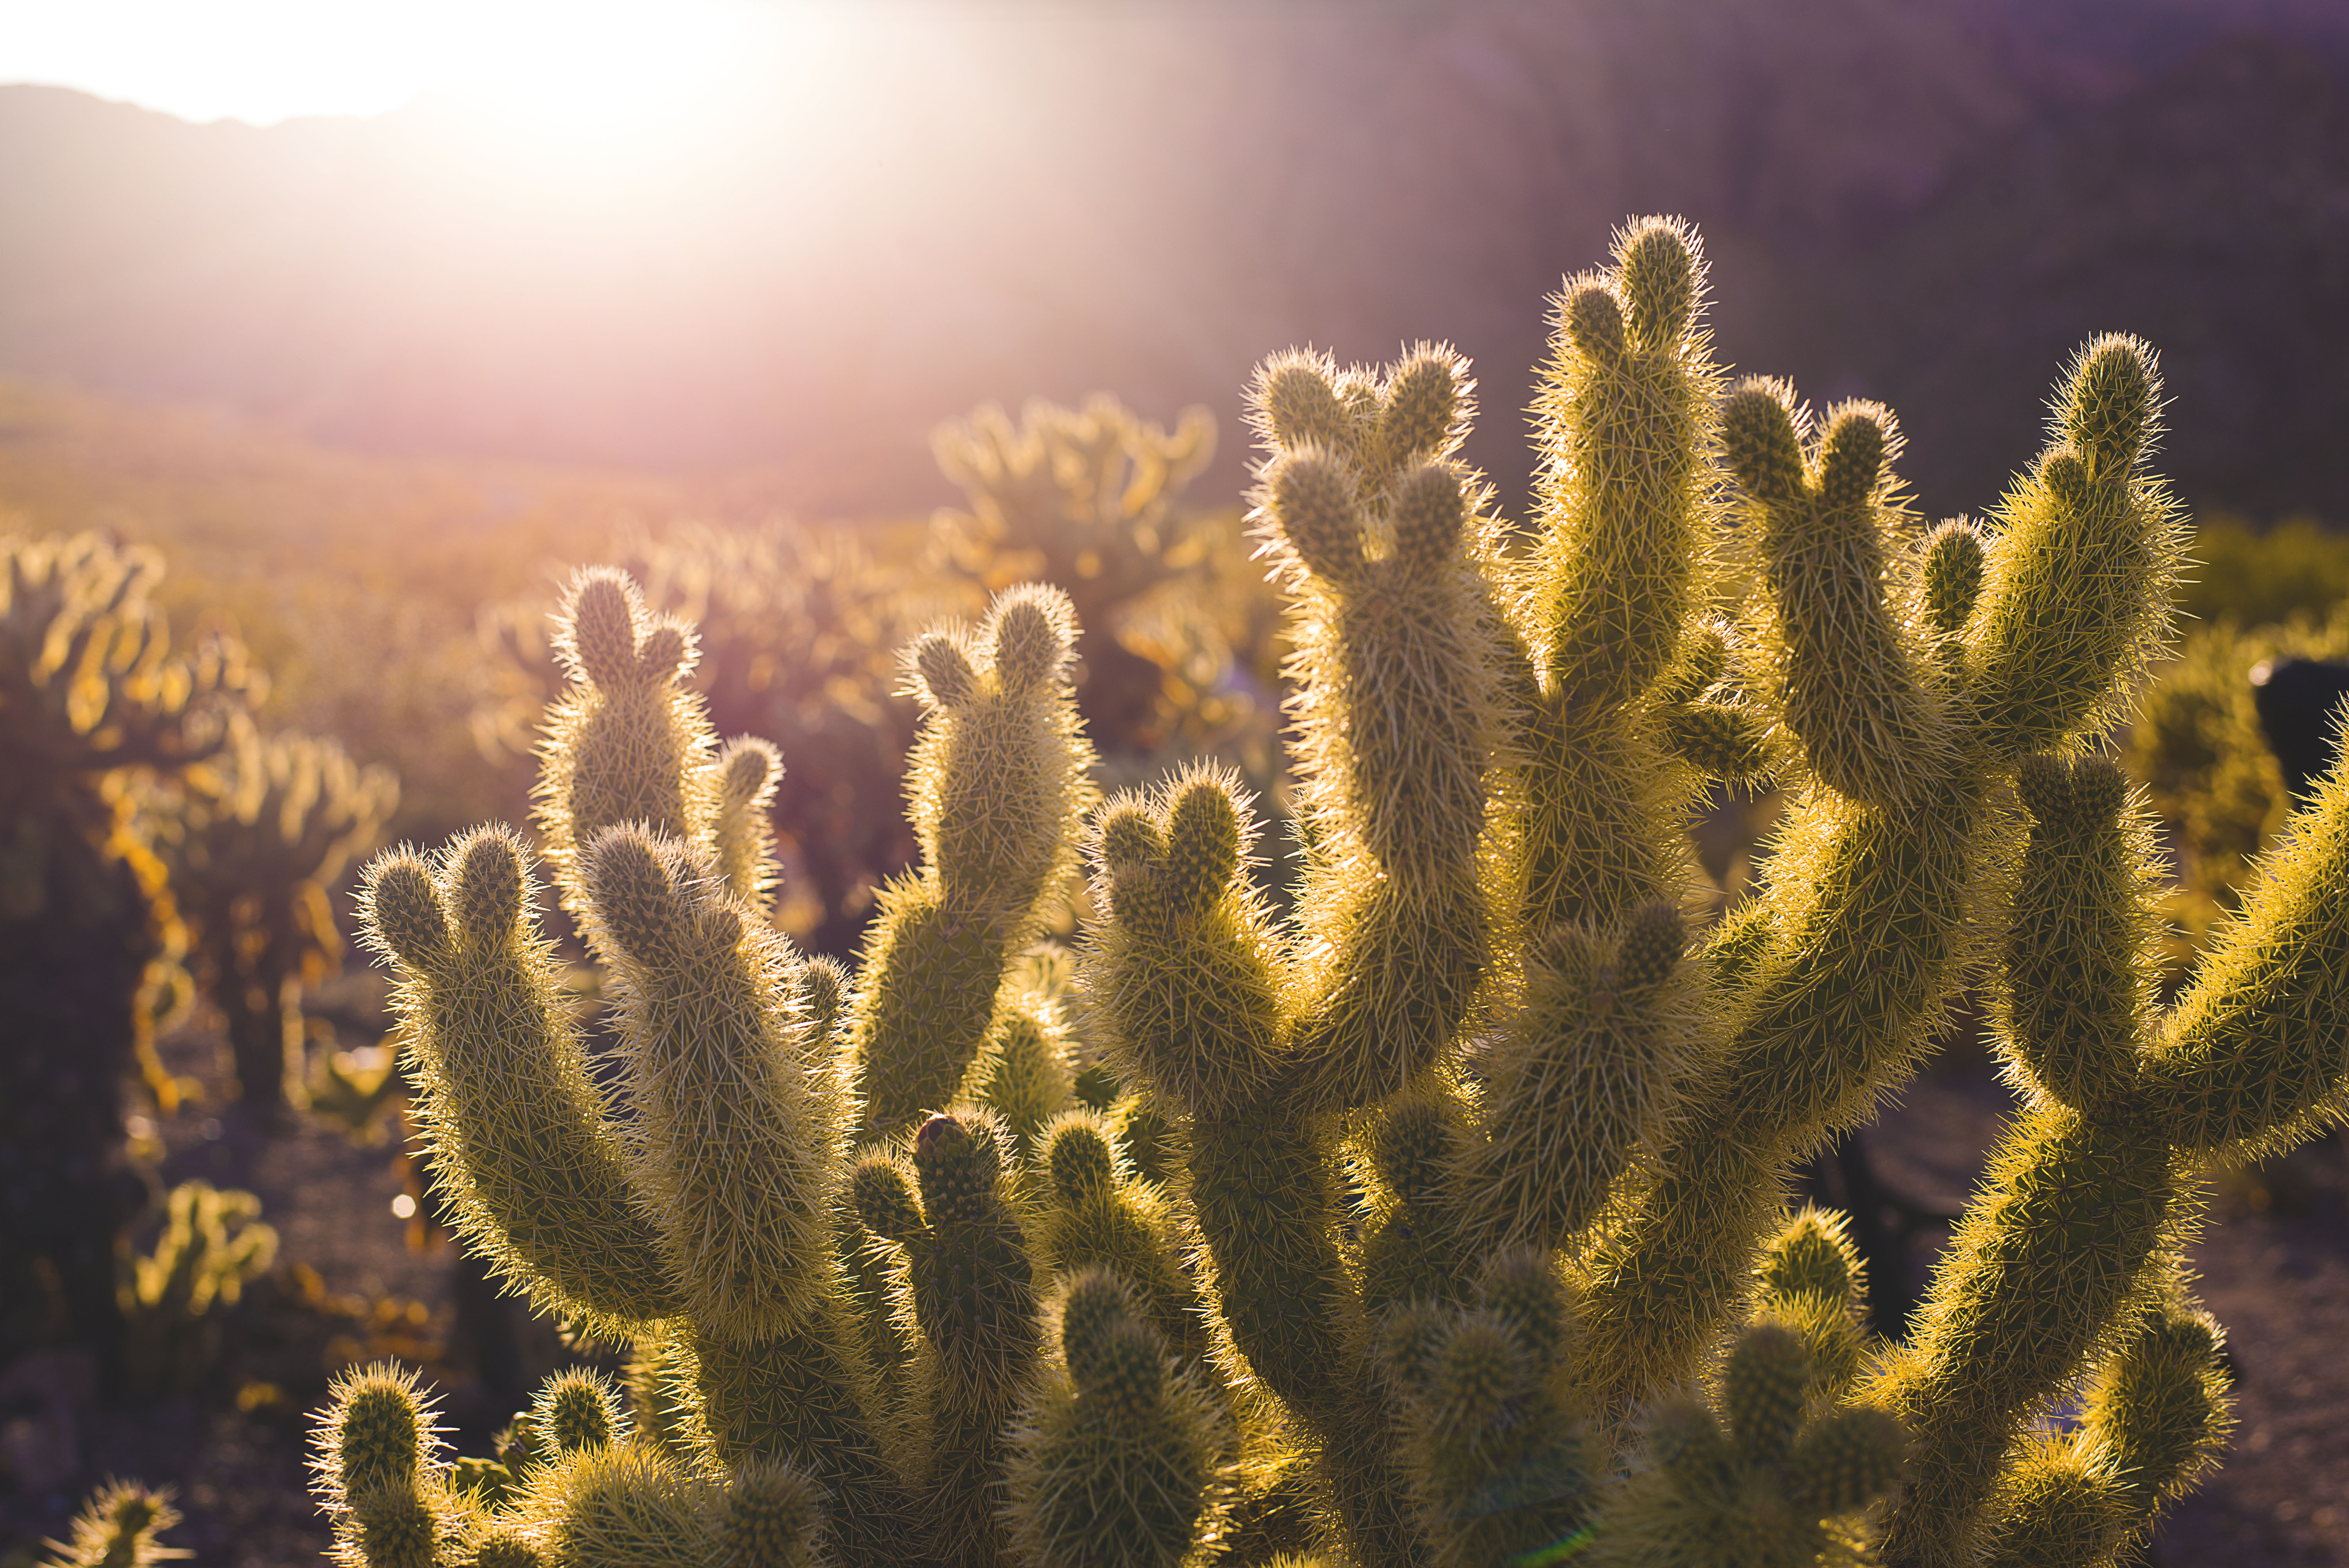 a cactus with sun shining through it